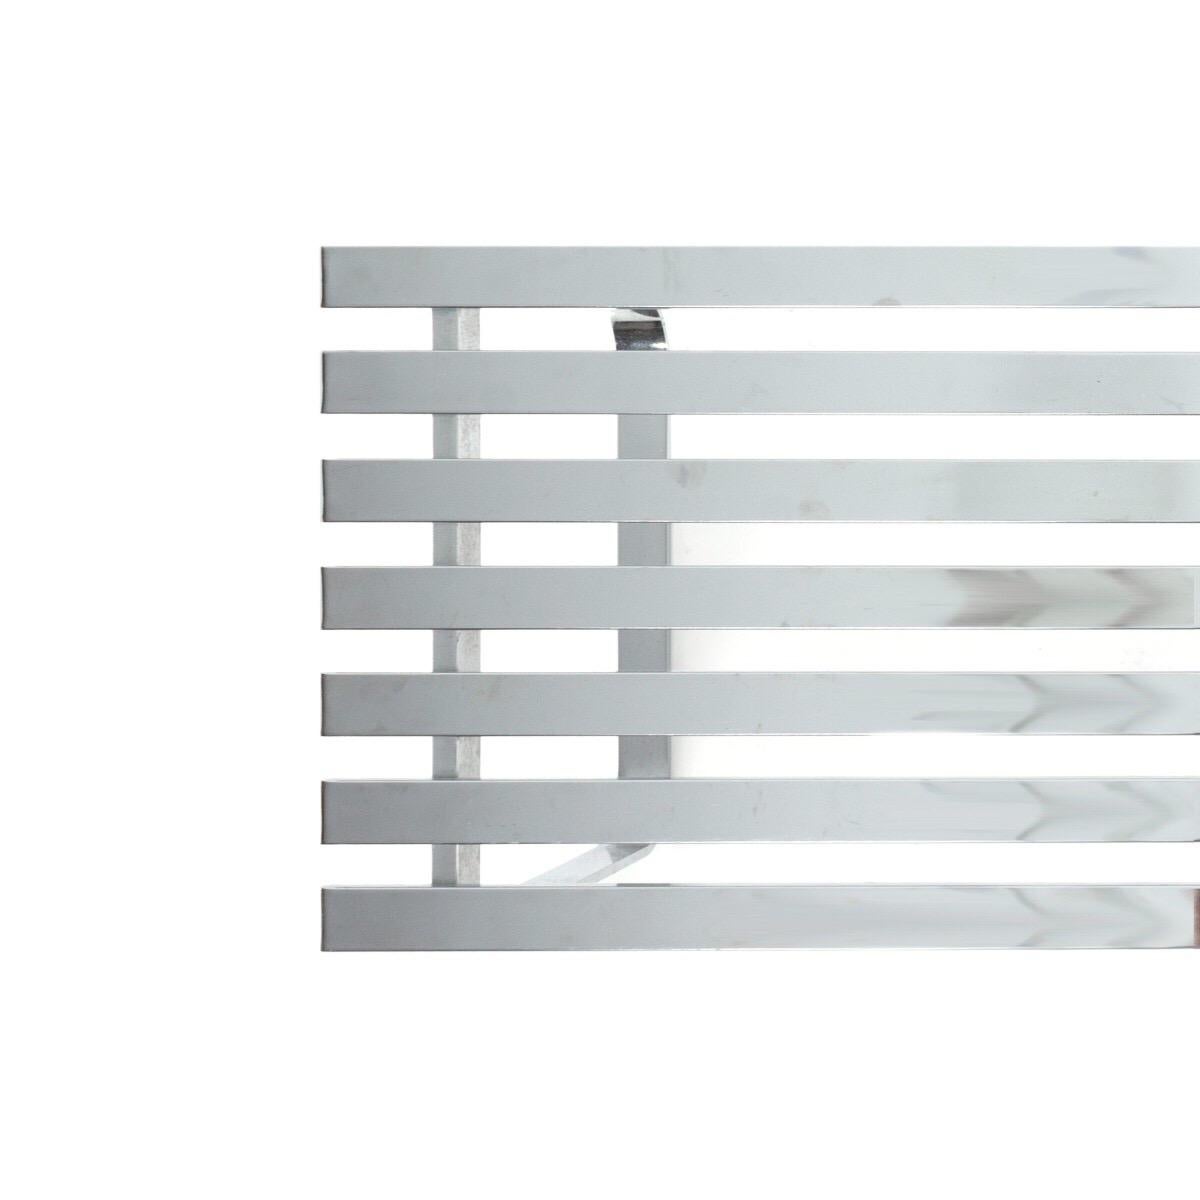 Minimalist Chrome Metal Slat Bench by Design Institute of America